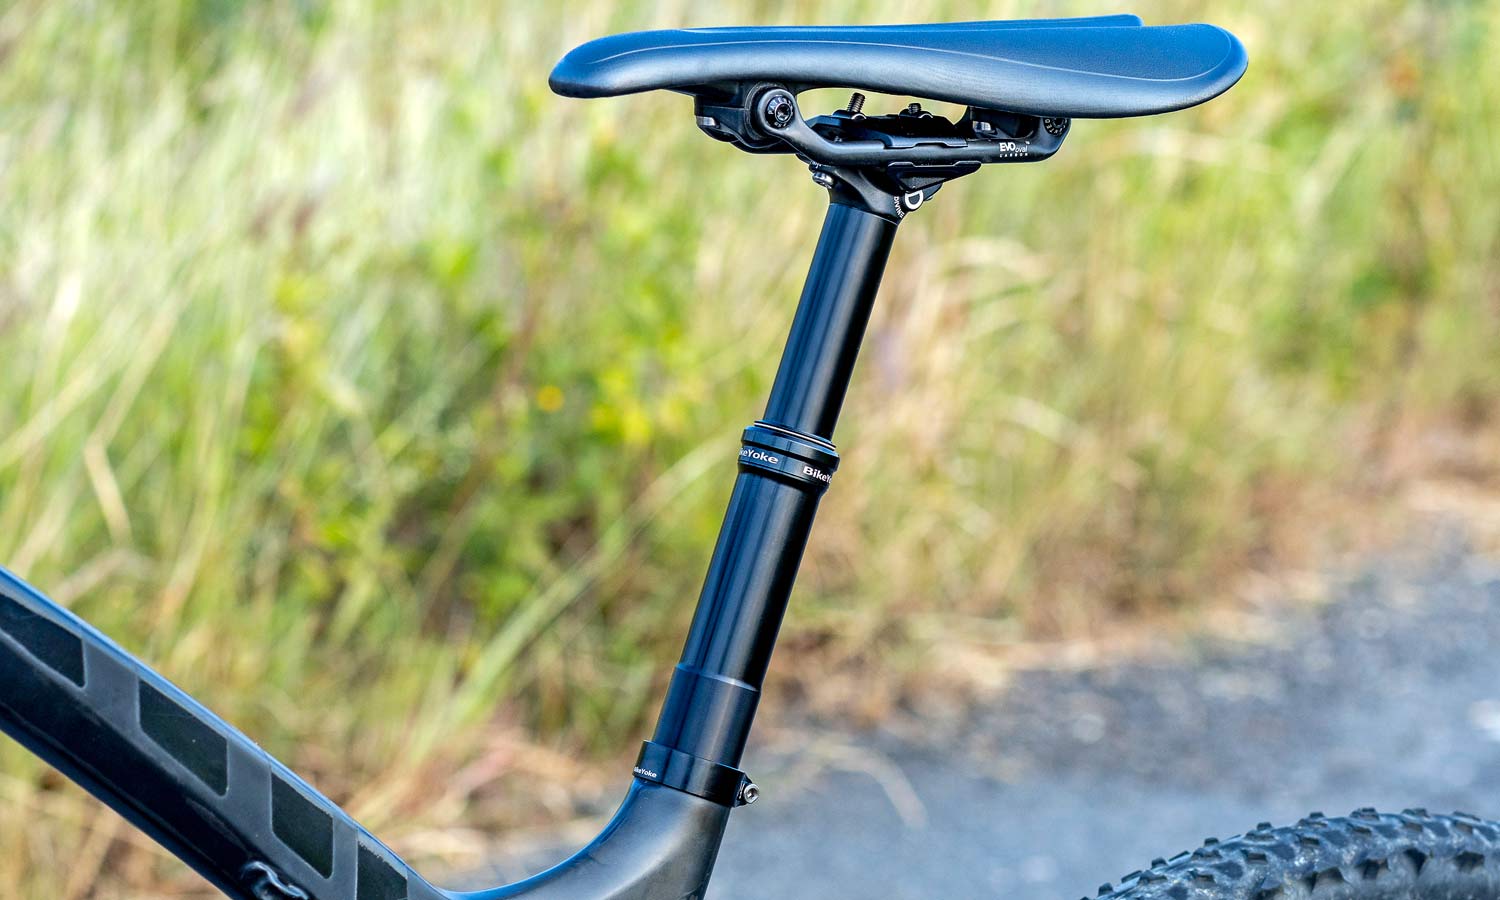 BikeYoke Divine SL pops up a super light, short 80mm travel XC dropper post